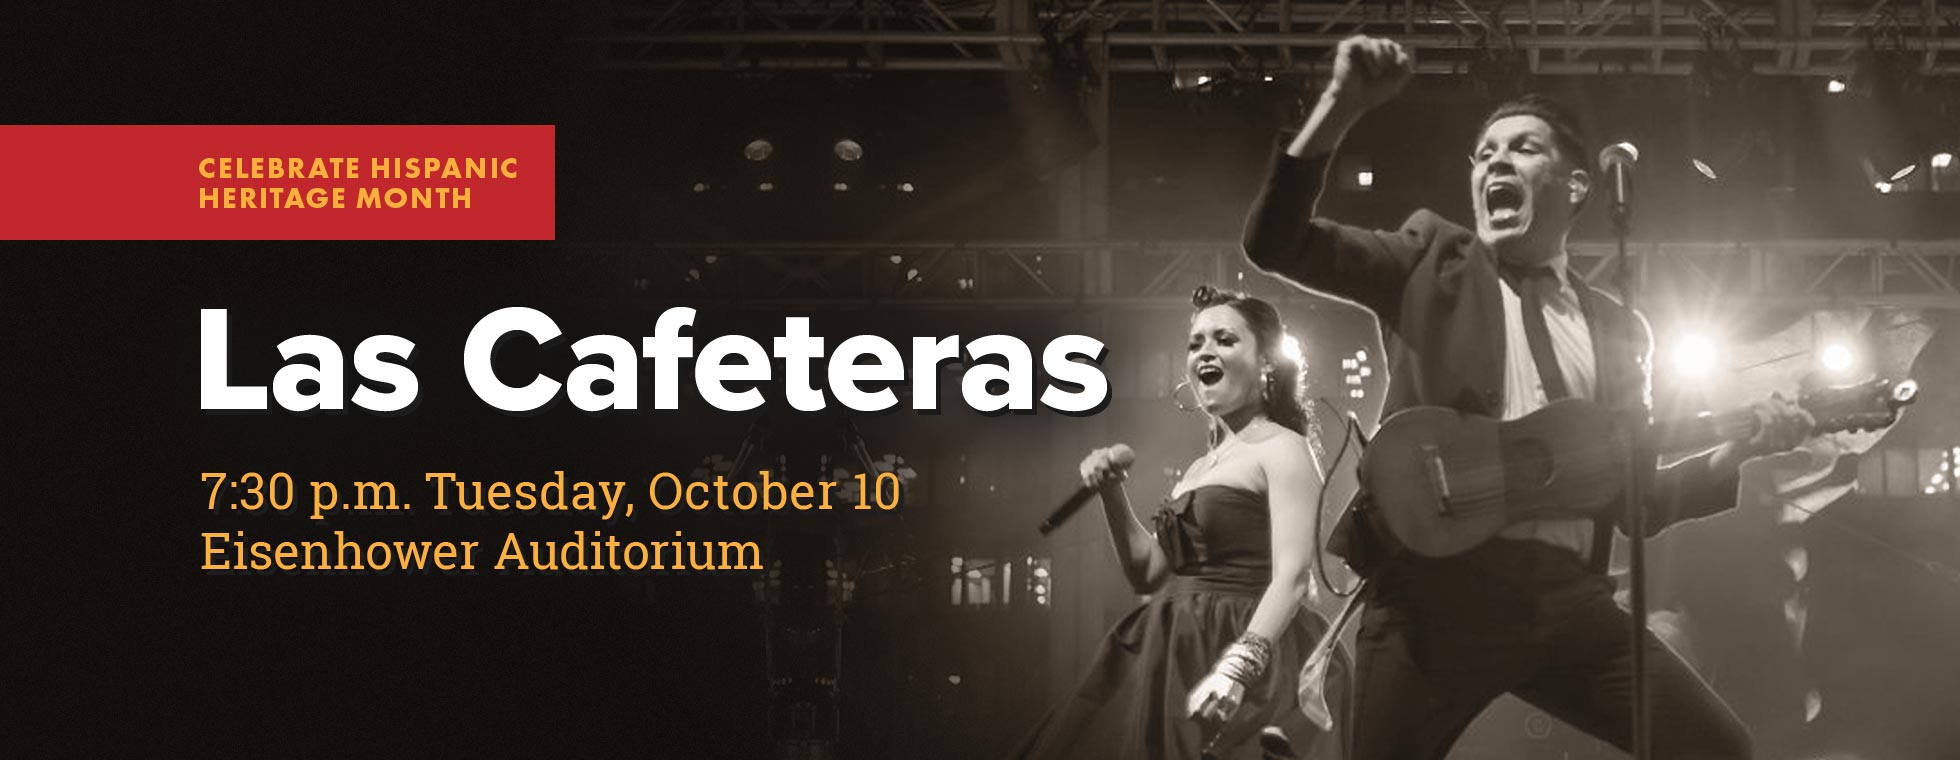 Celebrate Hispanic Heritage Month with Las Cafeteras 7:30 p.m. Tuesday, October 10 at Eisenhower Auditorium